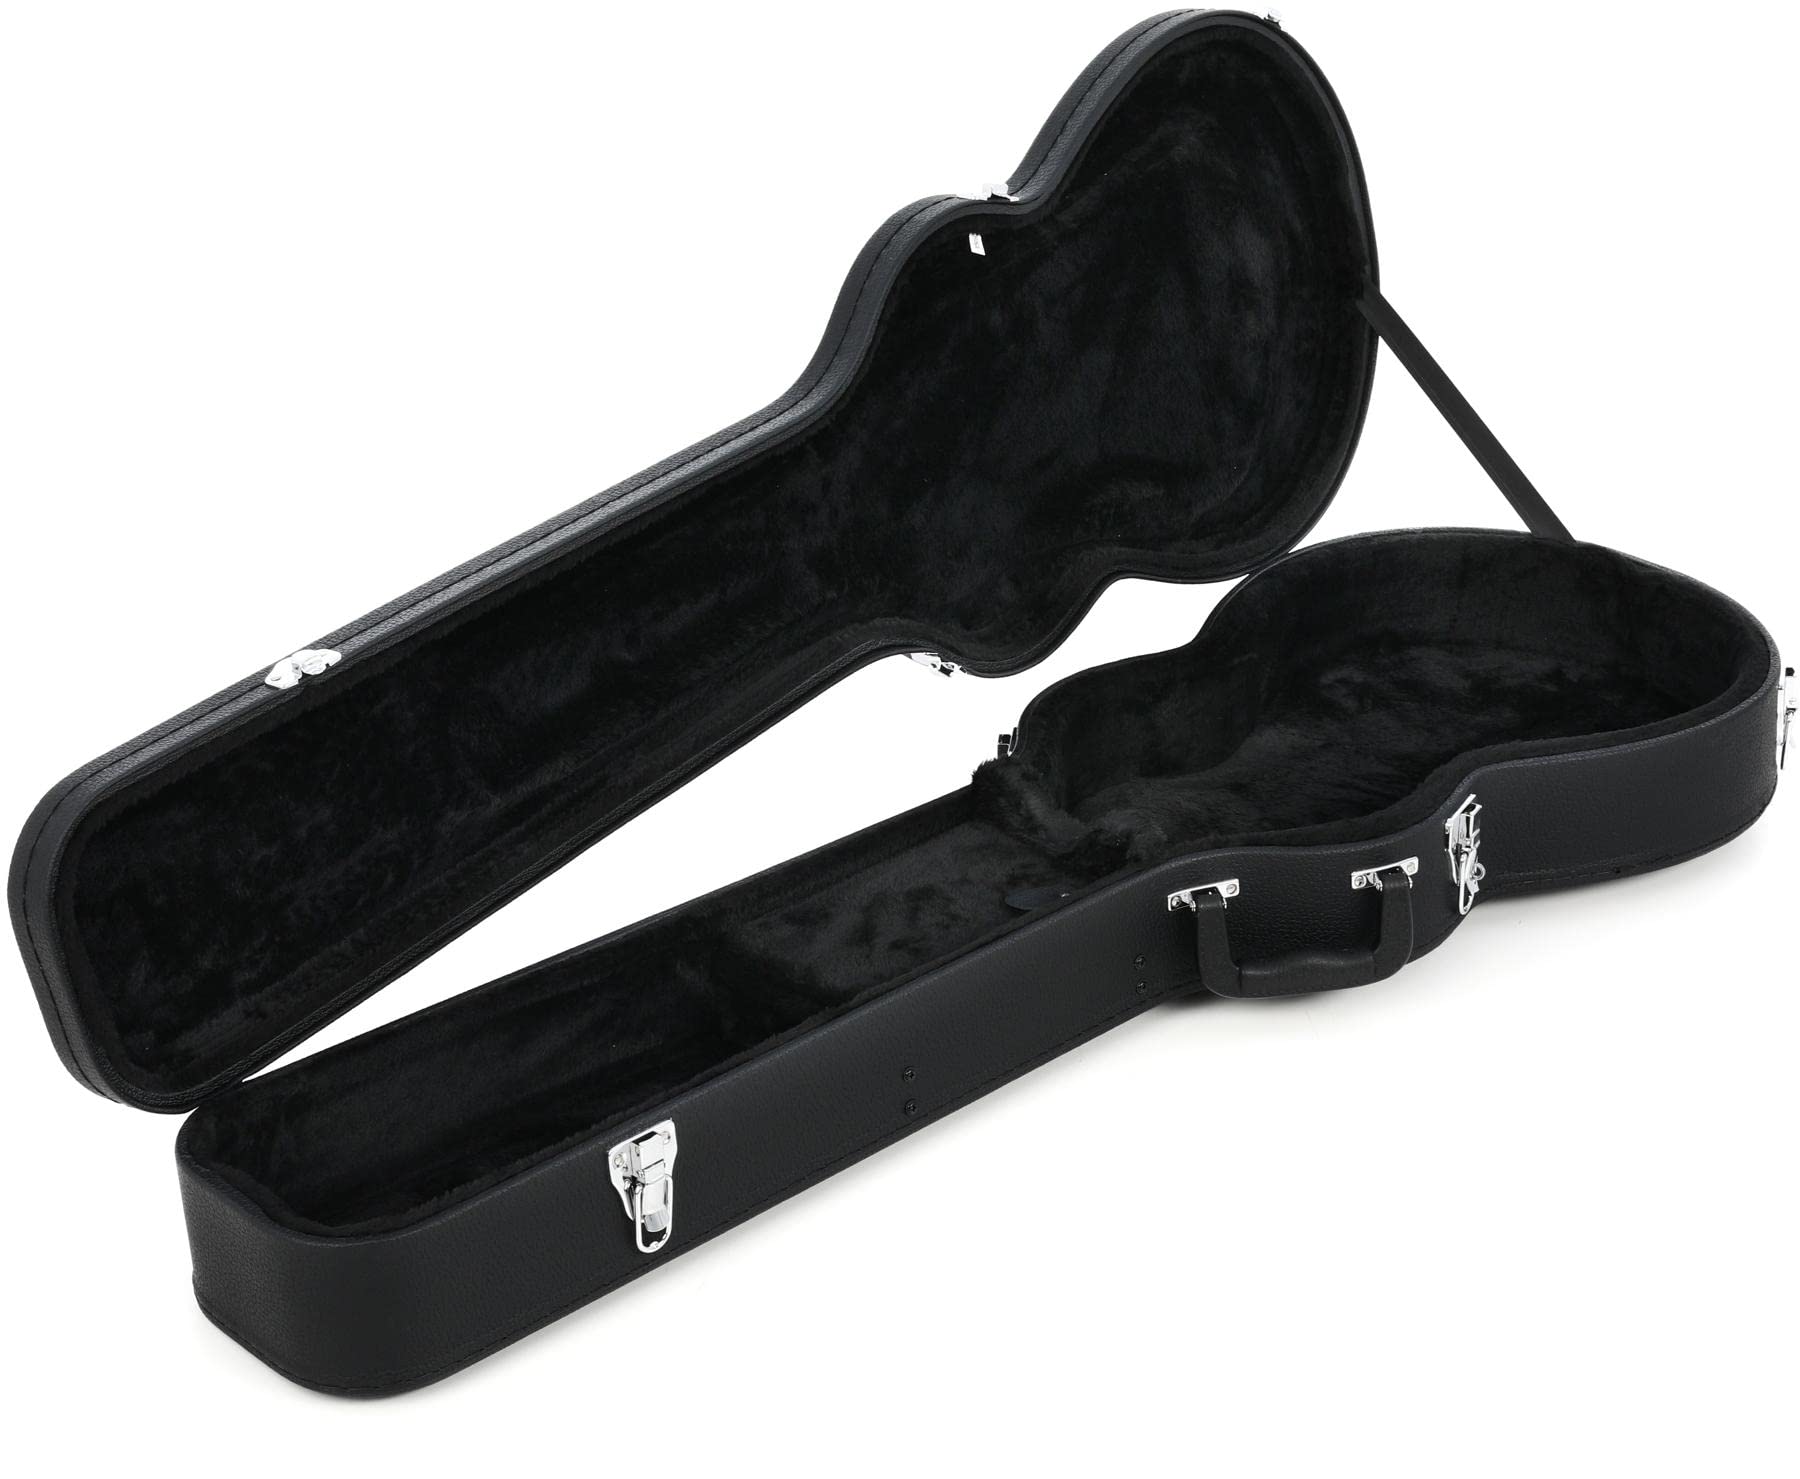 Gretsch Black Hardshell Guitar Case for G2220 Jr Jet Basses and G5260 and G5260T Jet Baritones